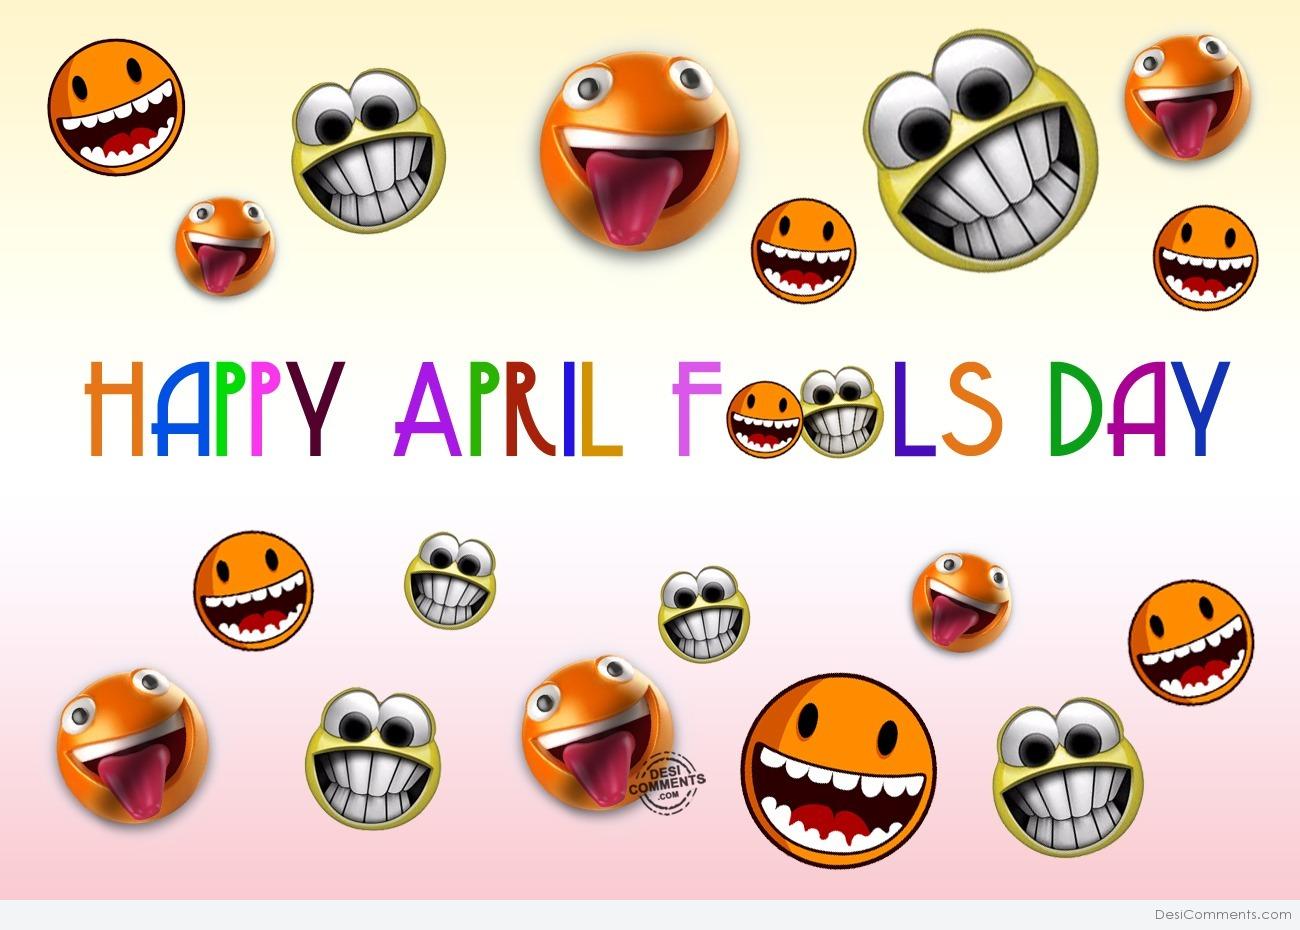 Happy April Fools Day - DesiComments.com